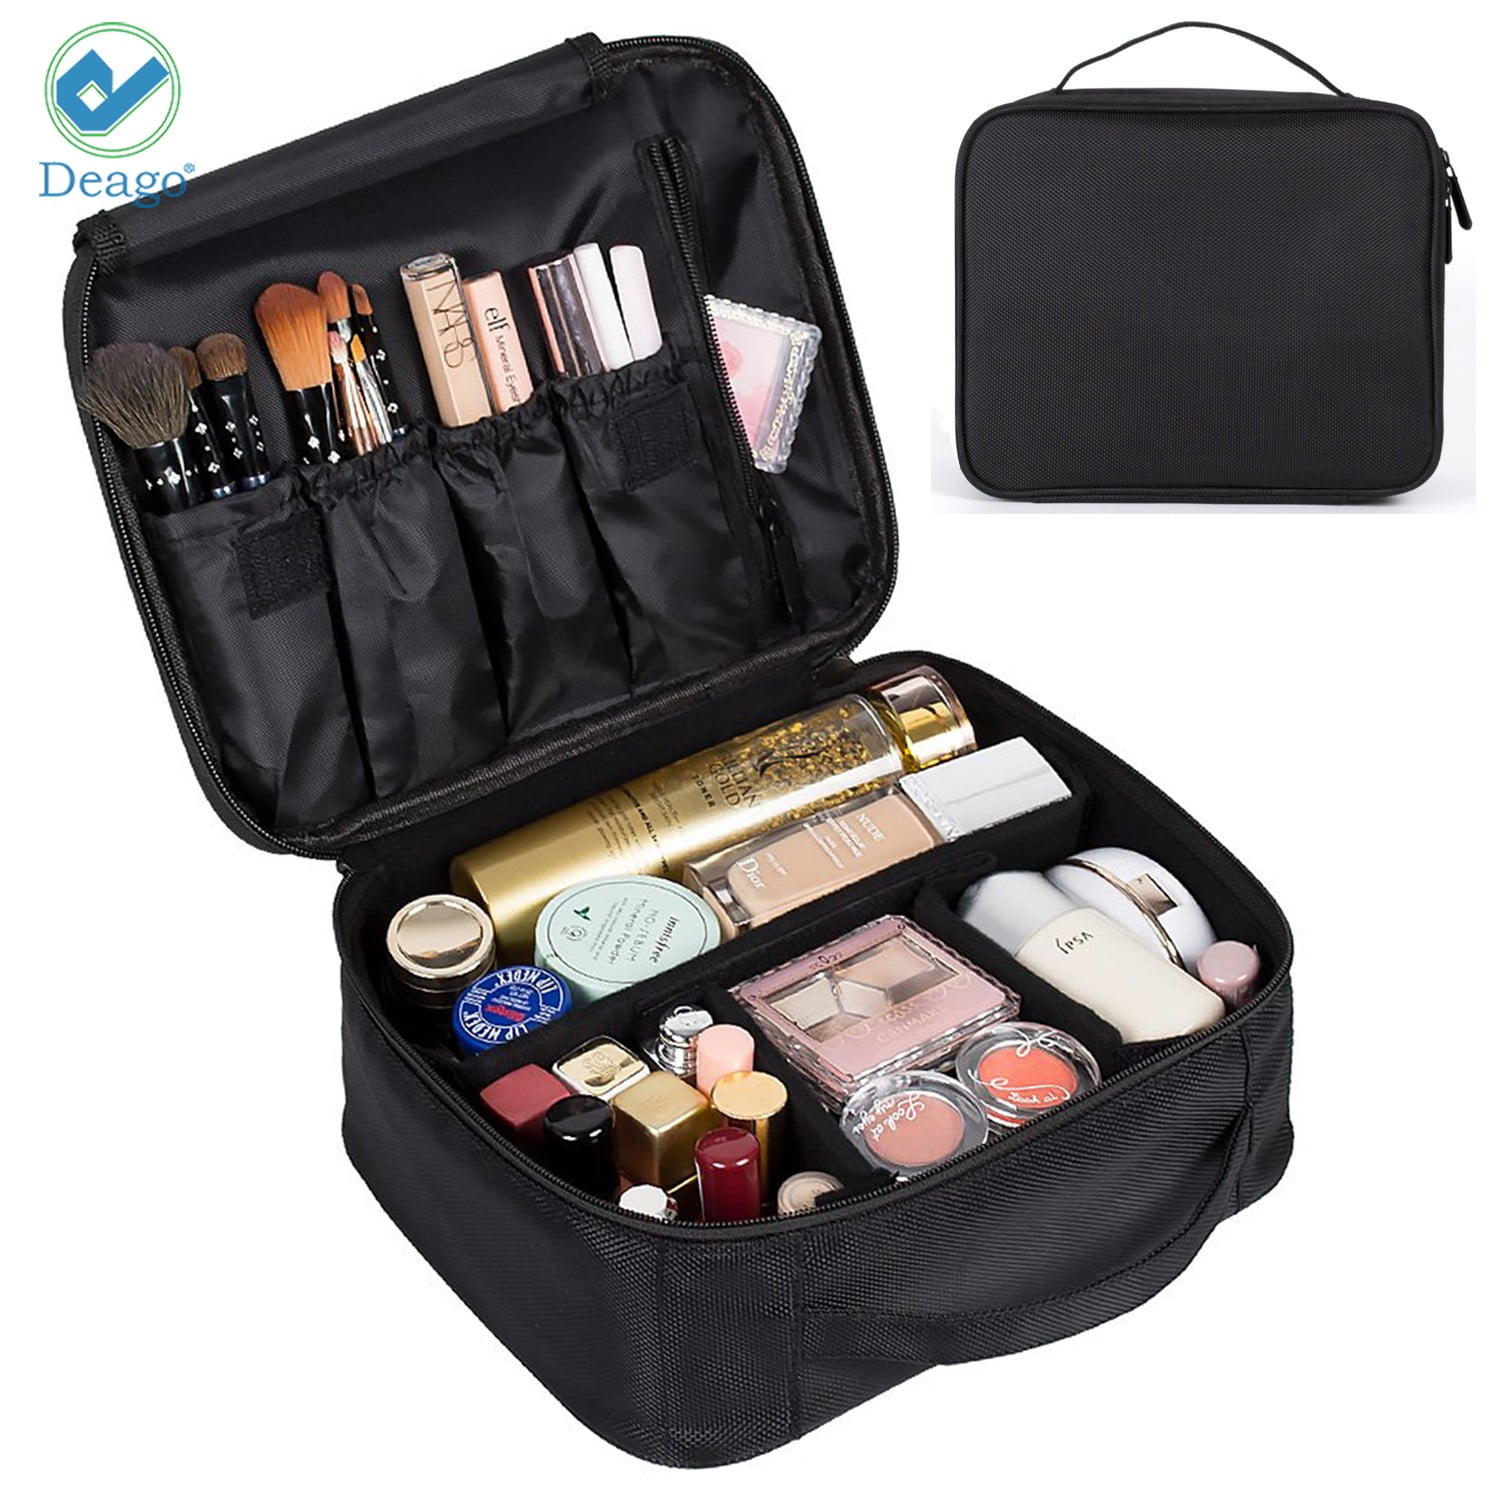  Katadem Travel Makeup Bag,Large Opening Portable